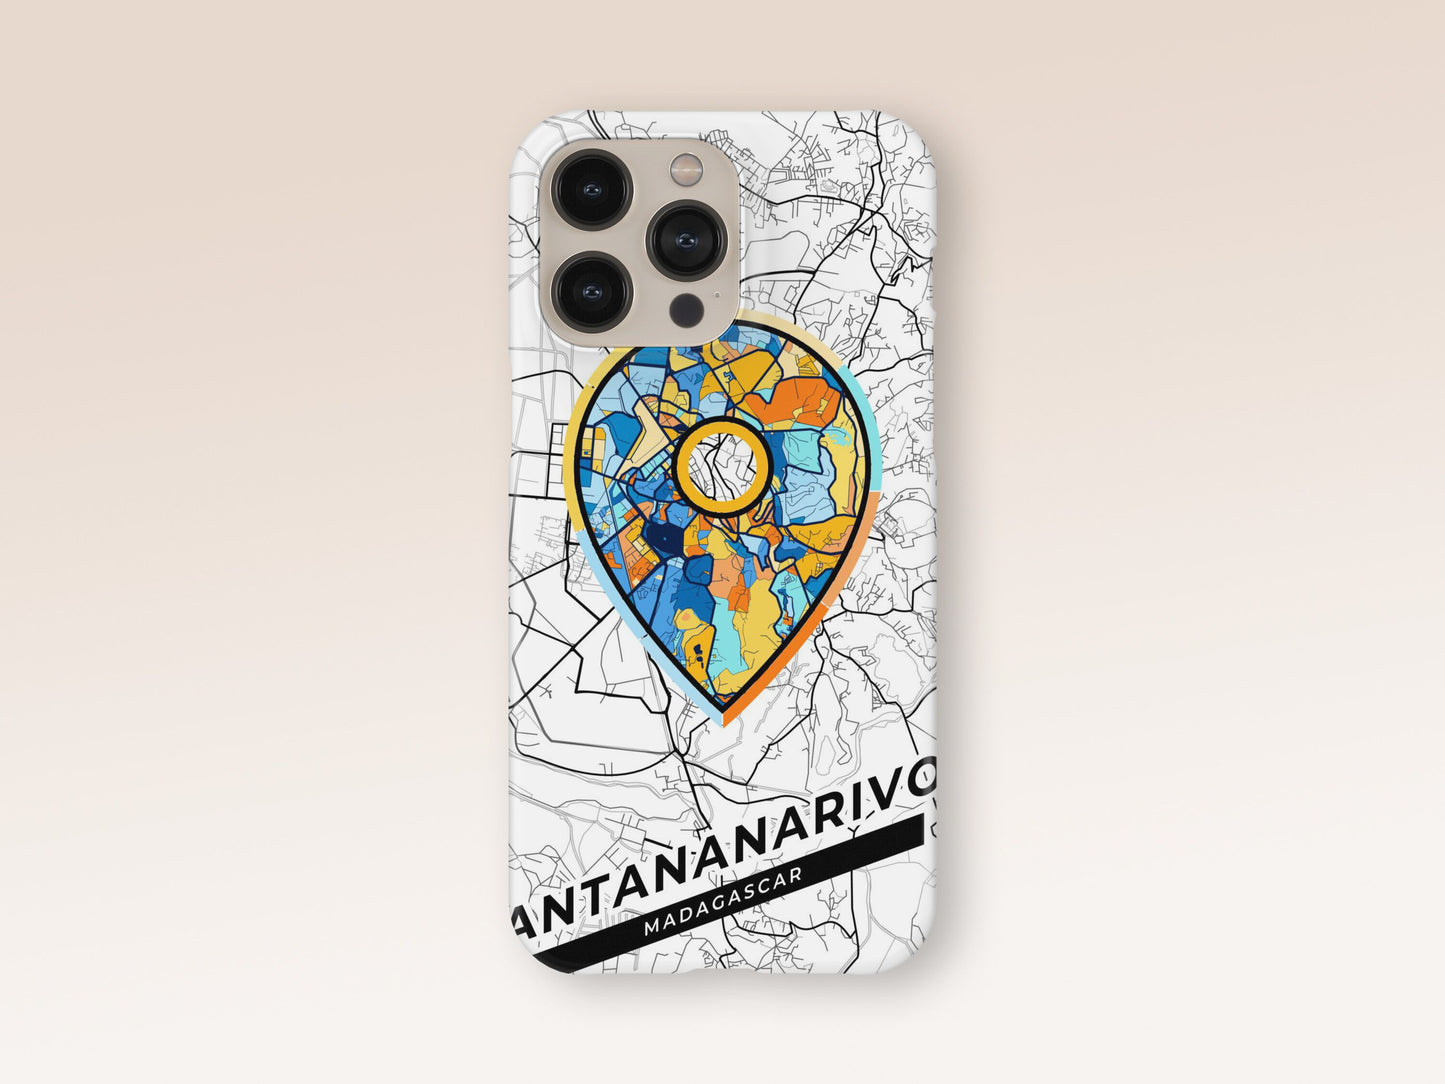 Antananarivo Madagascar slim phone case with colorful icon. Birthday, wedding or housewarming gift. Couple match cases. 1